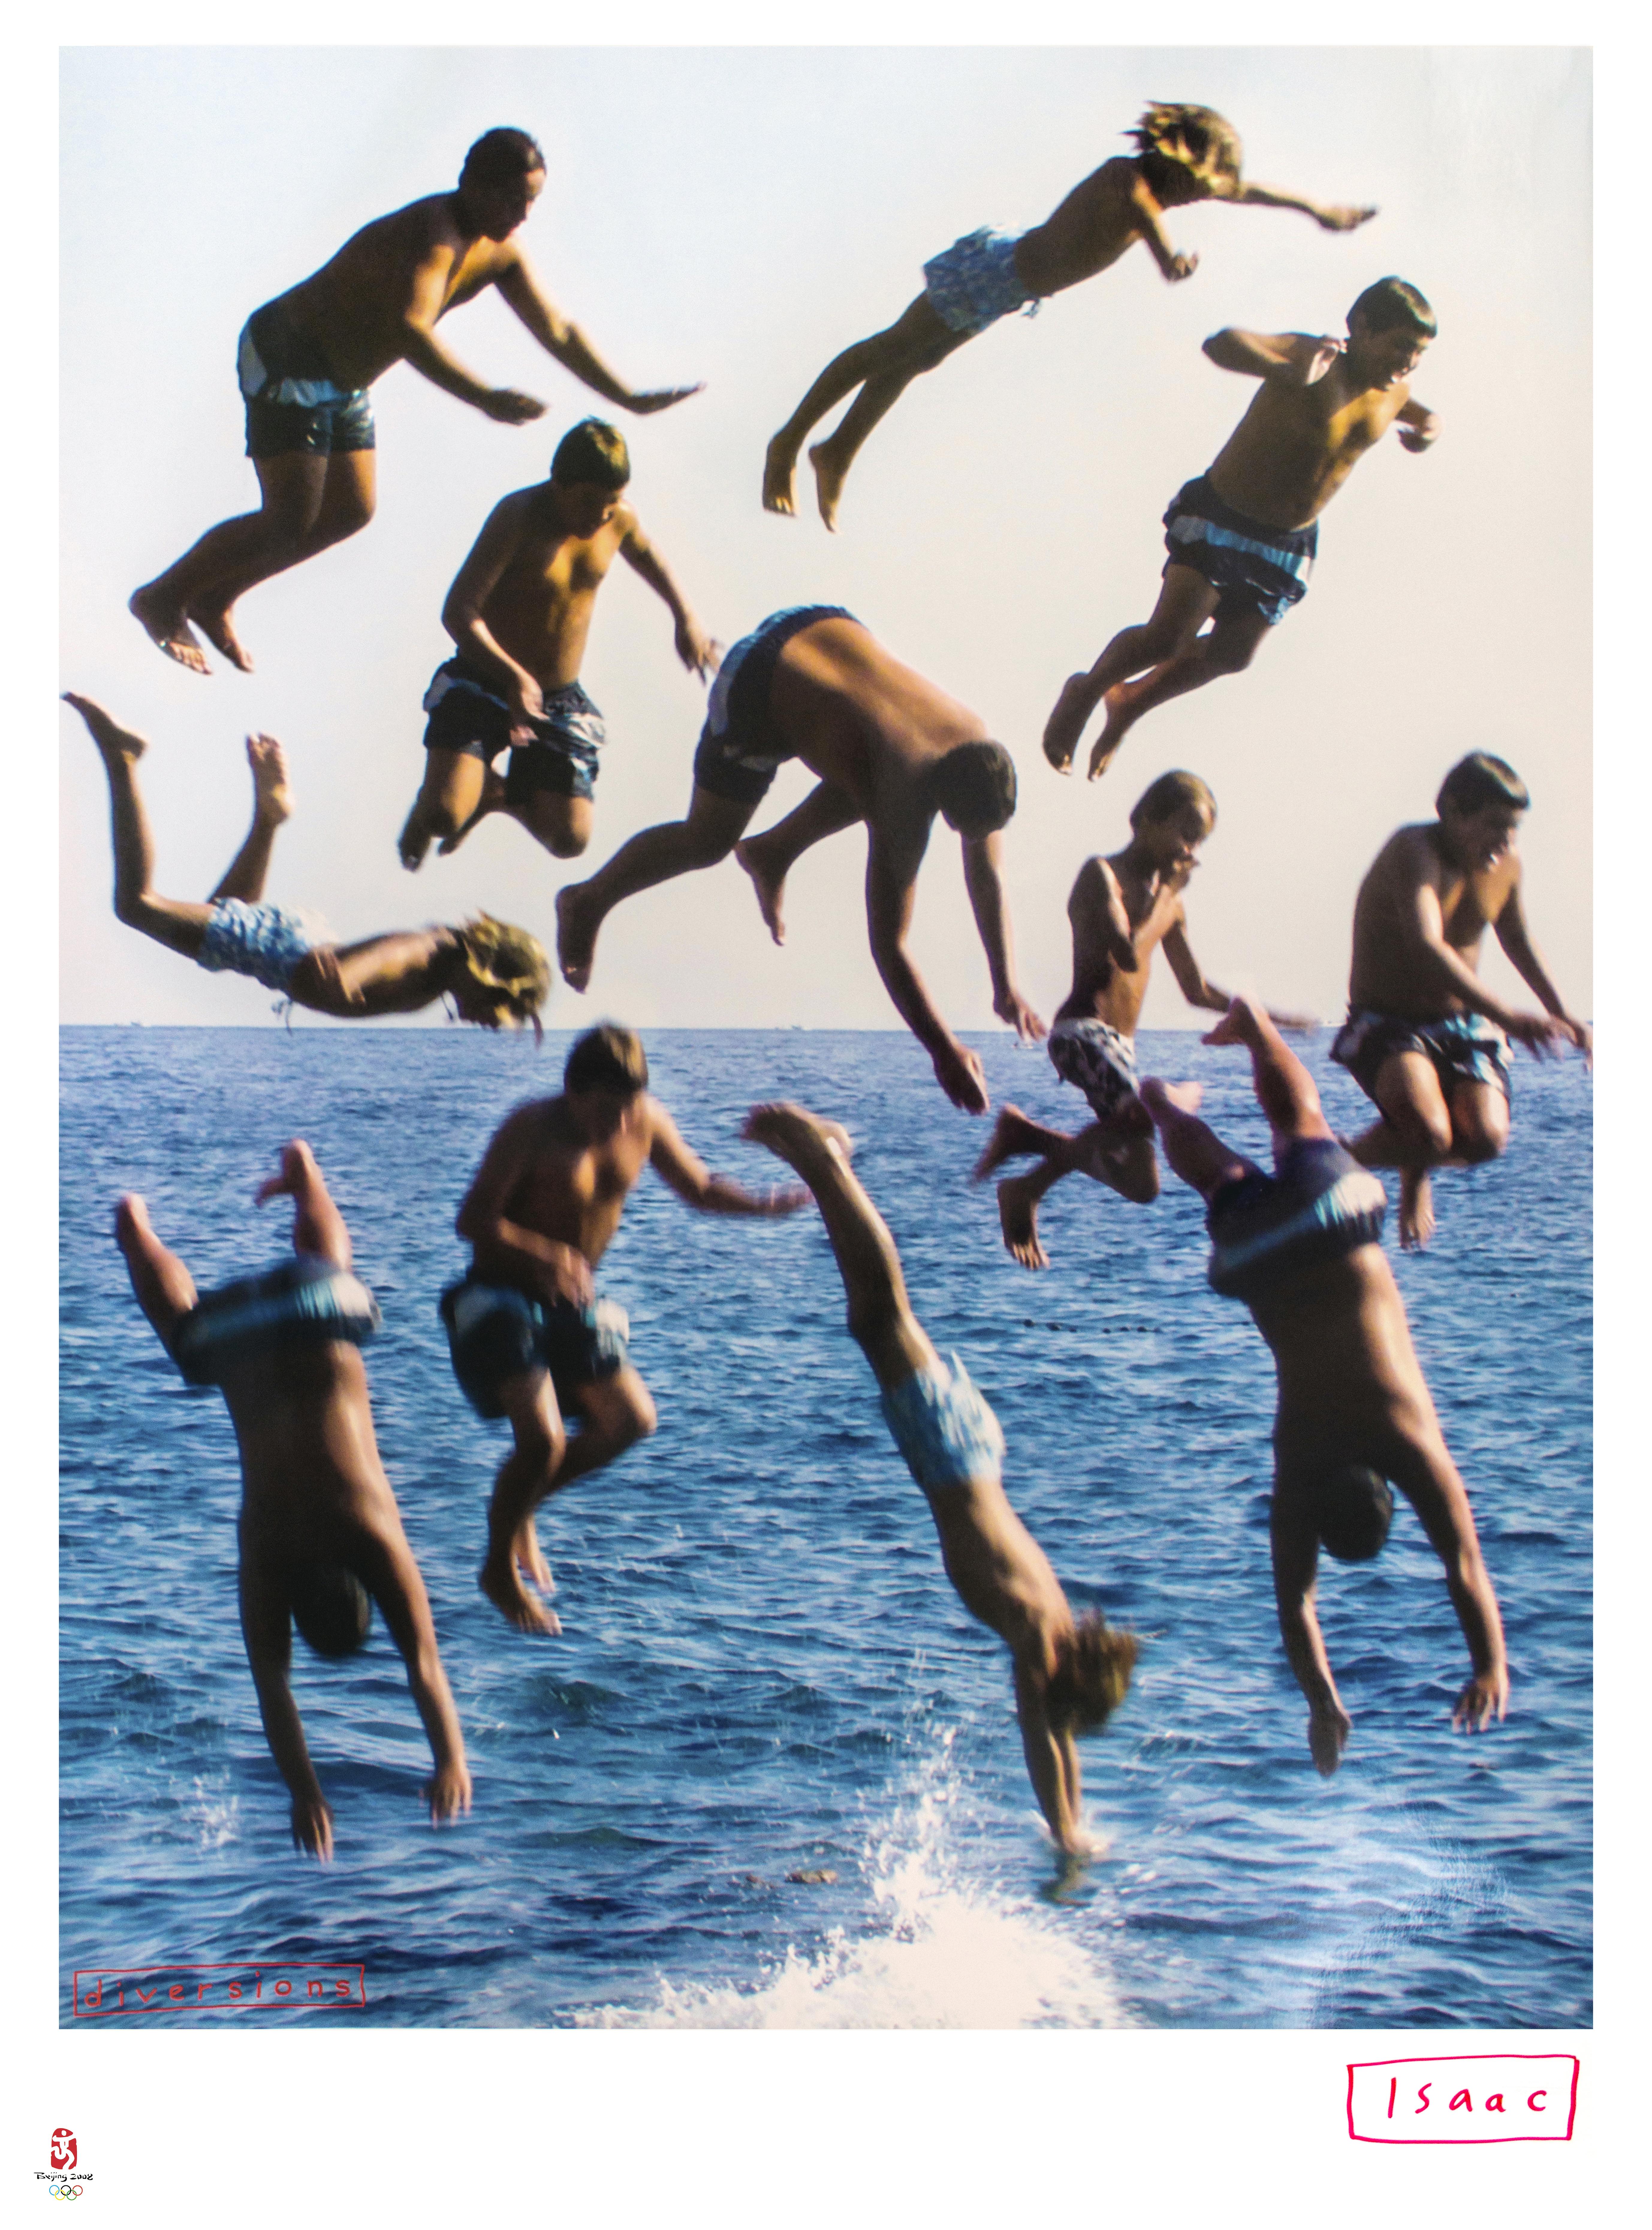 Jeffrey Isaac Color Photograph - Diversions - Original Photo Lithograph by J. Isaac - 2008